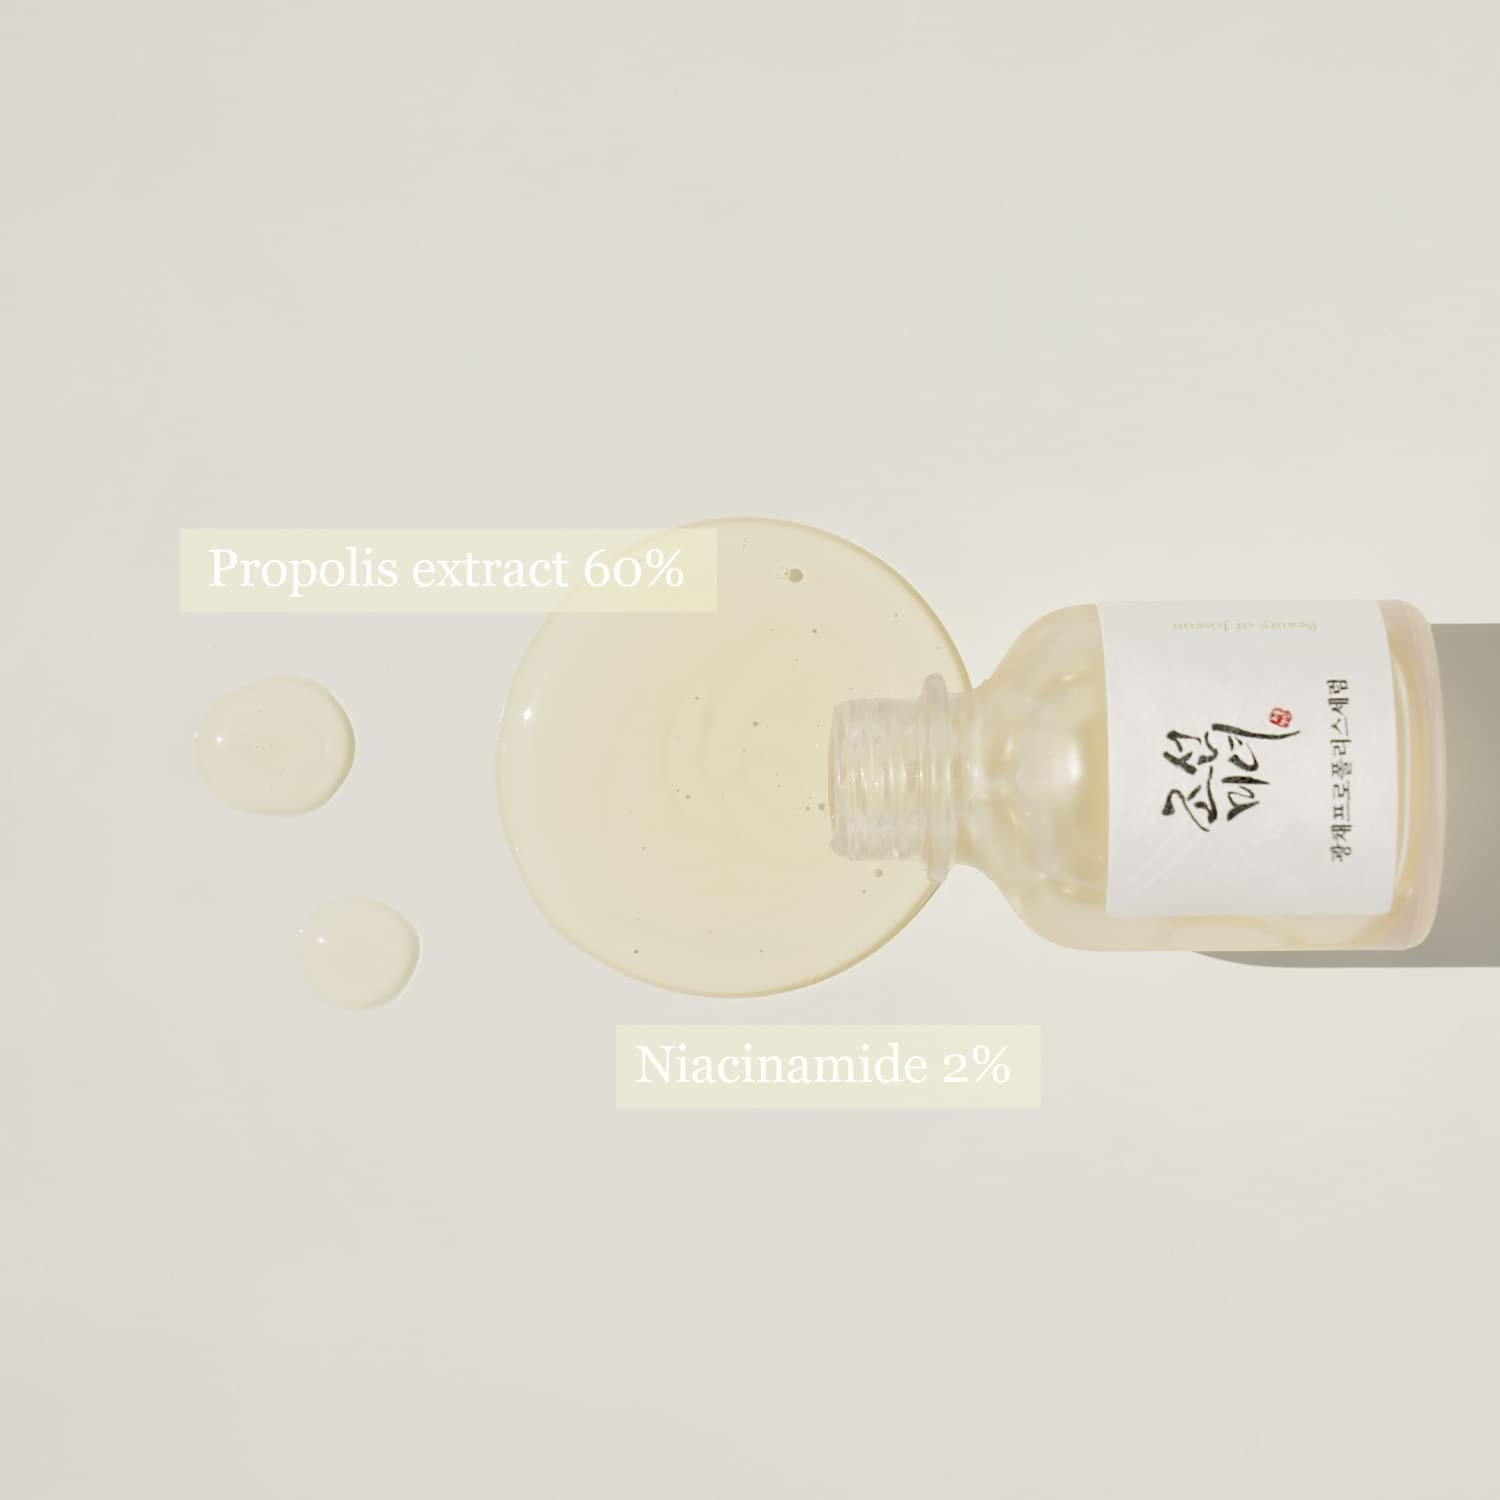 beauty-of-joseon-serum-eclat-propolis-niacinamide-30ml